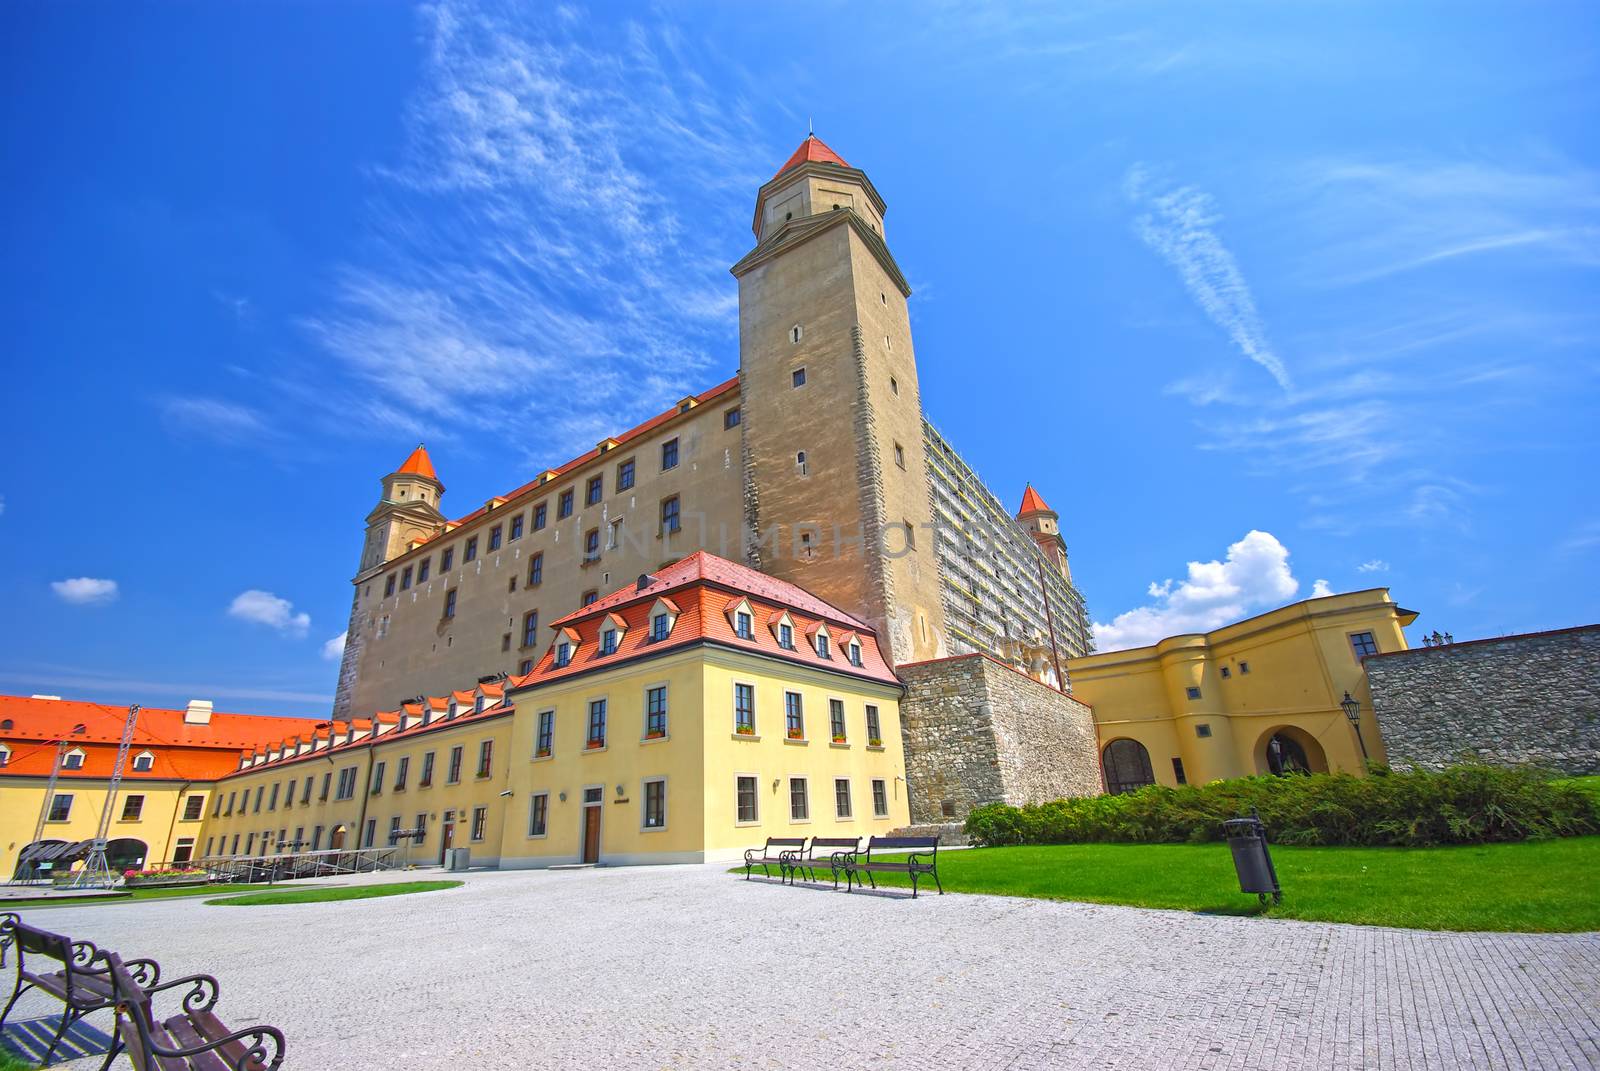 Courtyard of Bratislava Castle by savcoco